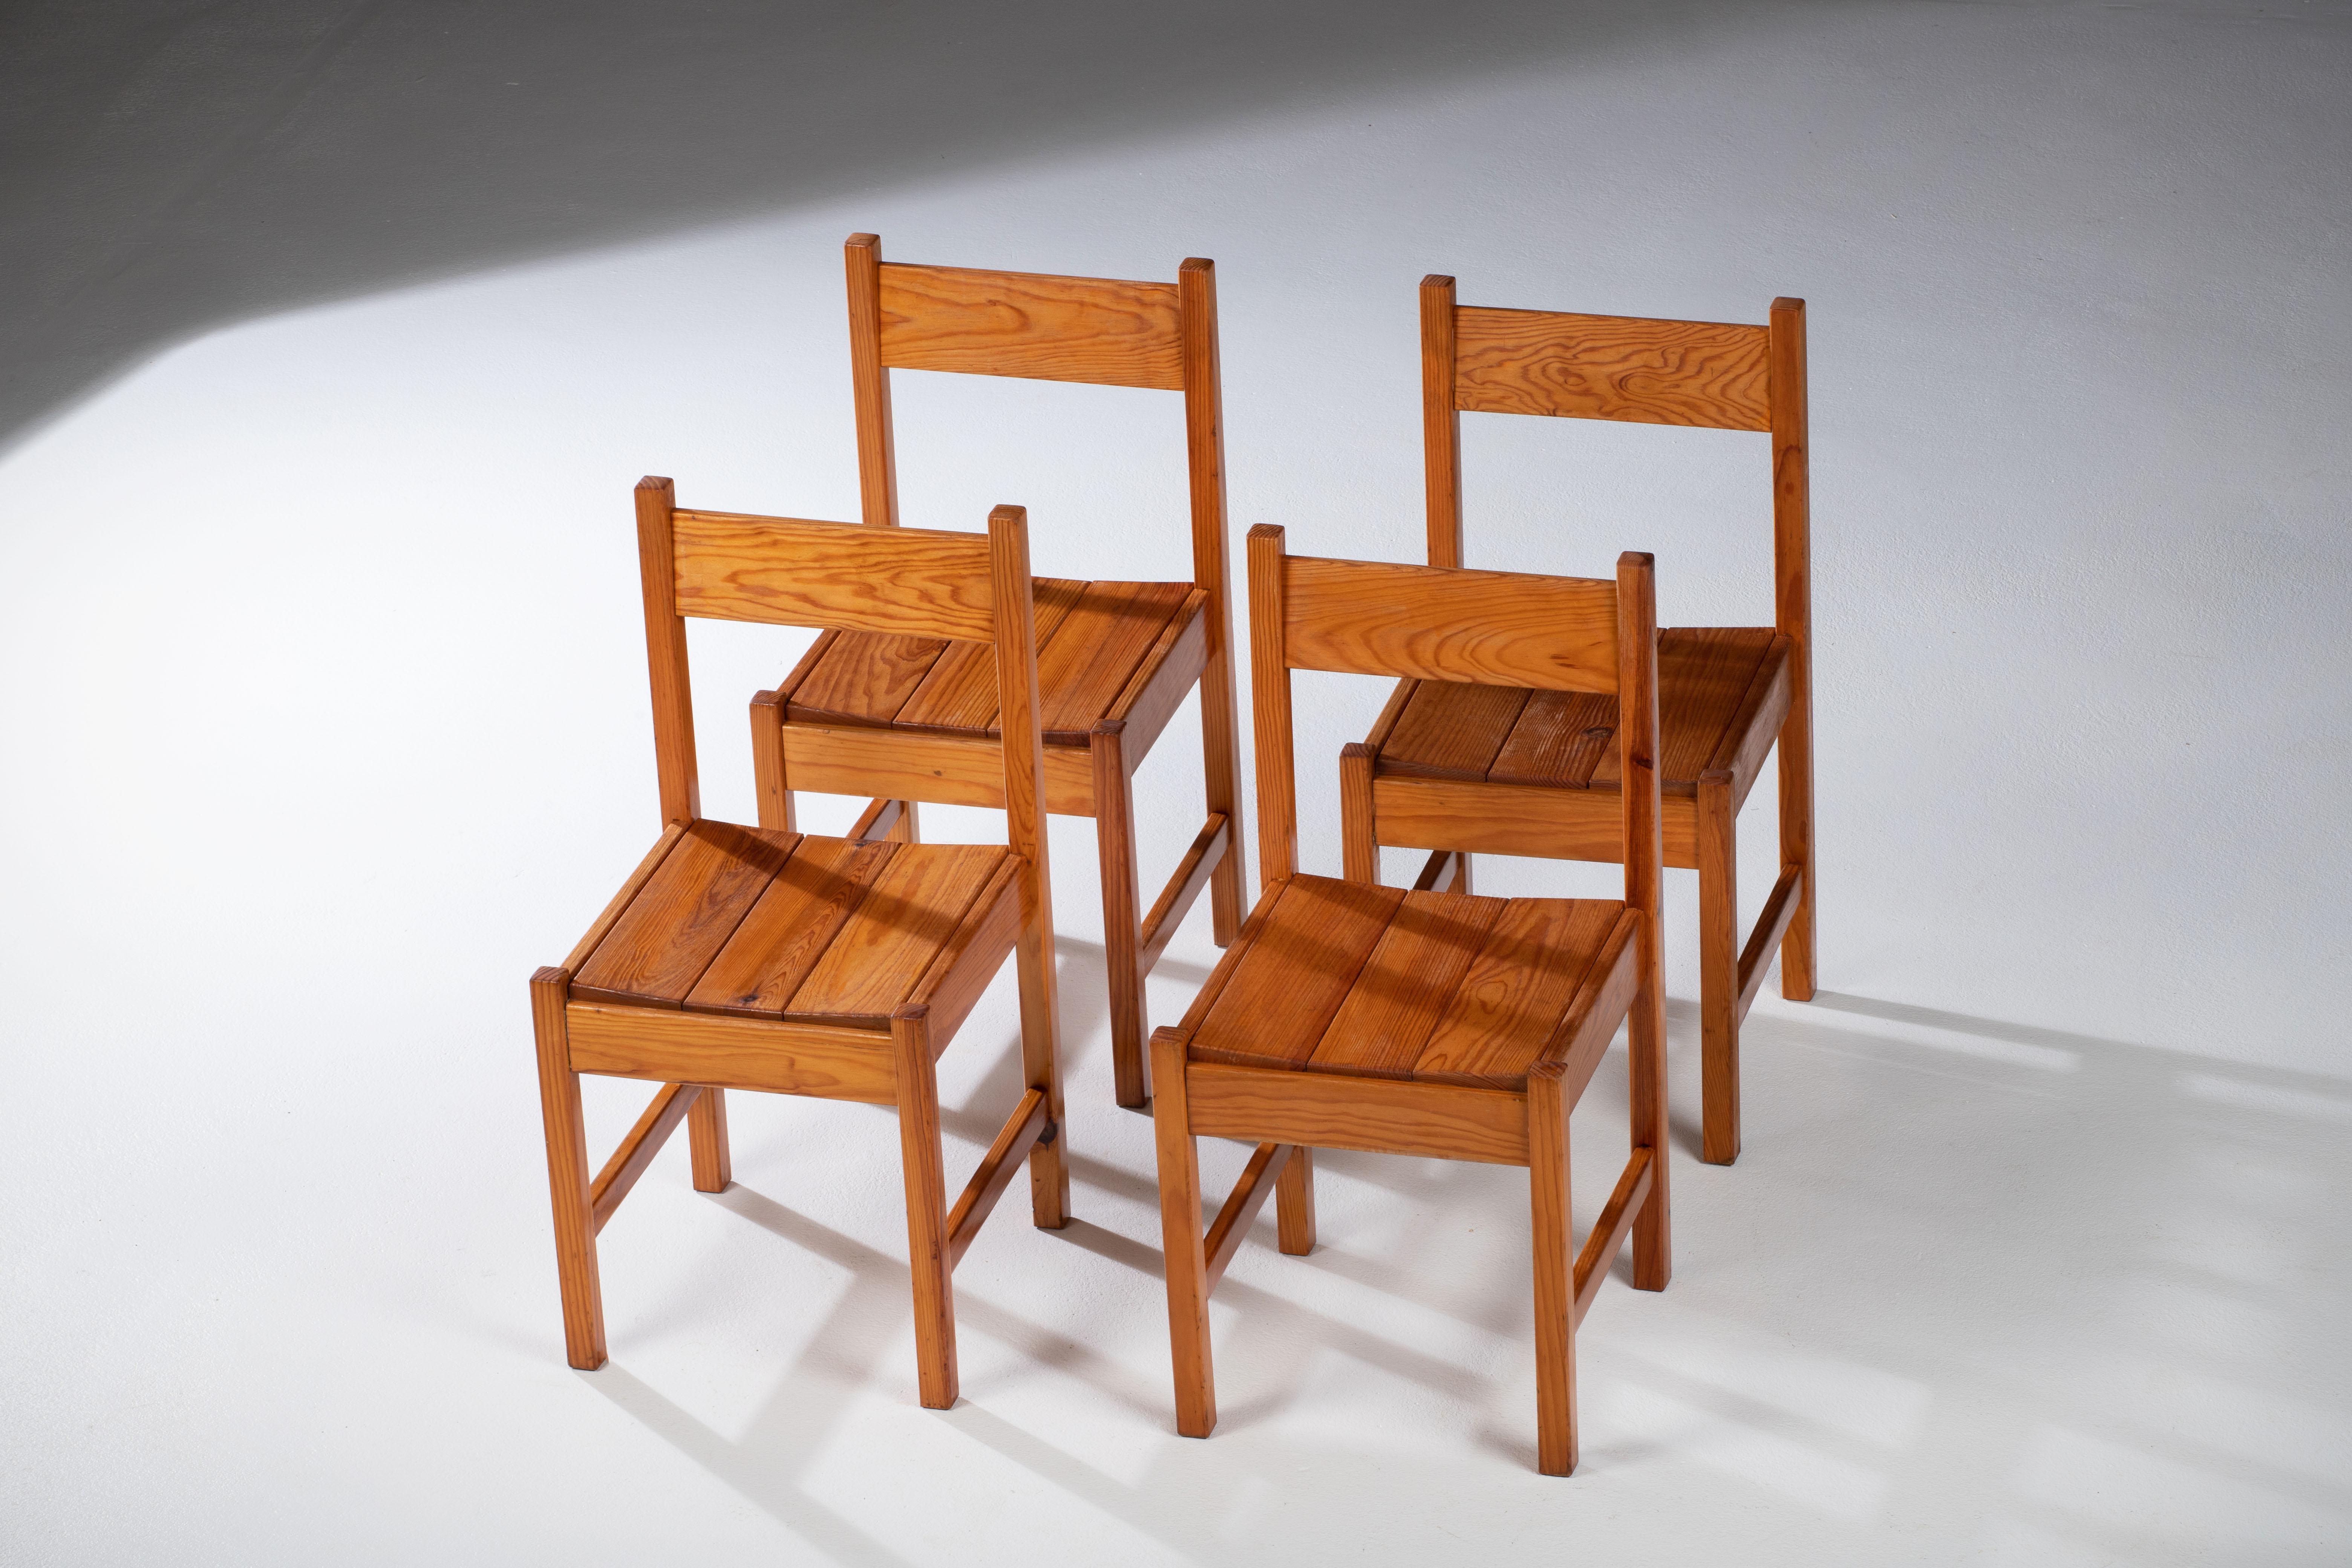 Ensemble de quatre chaises en pin massif d'après Charlotte Perriand.
Bon état vintage.